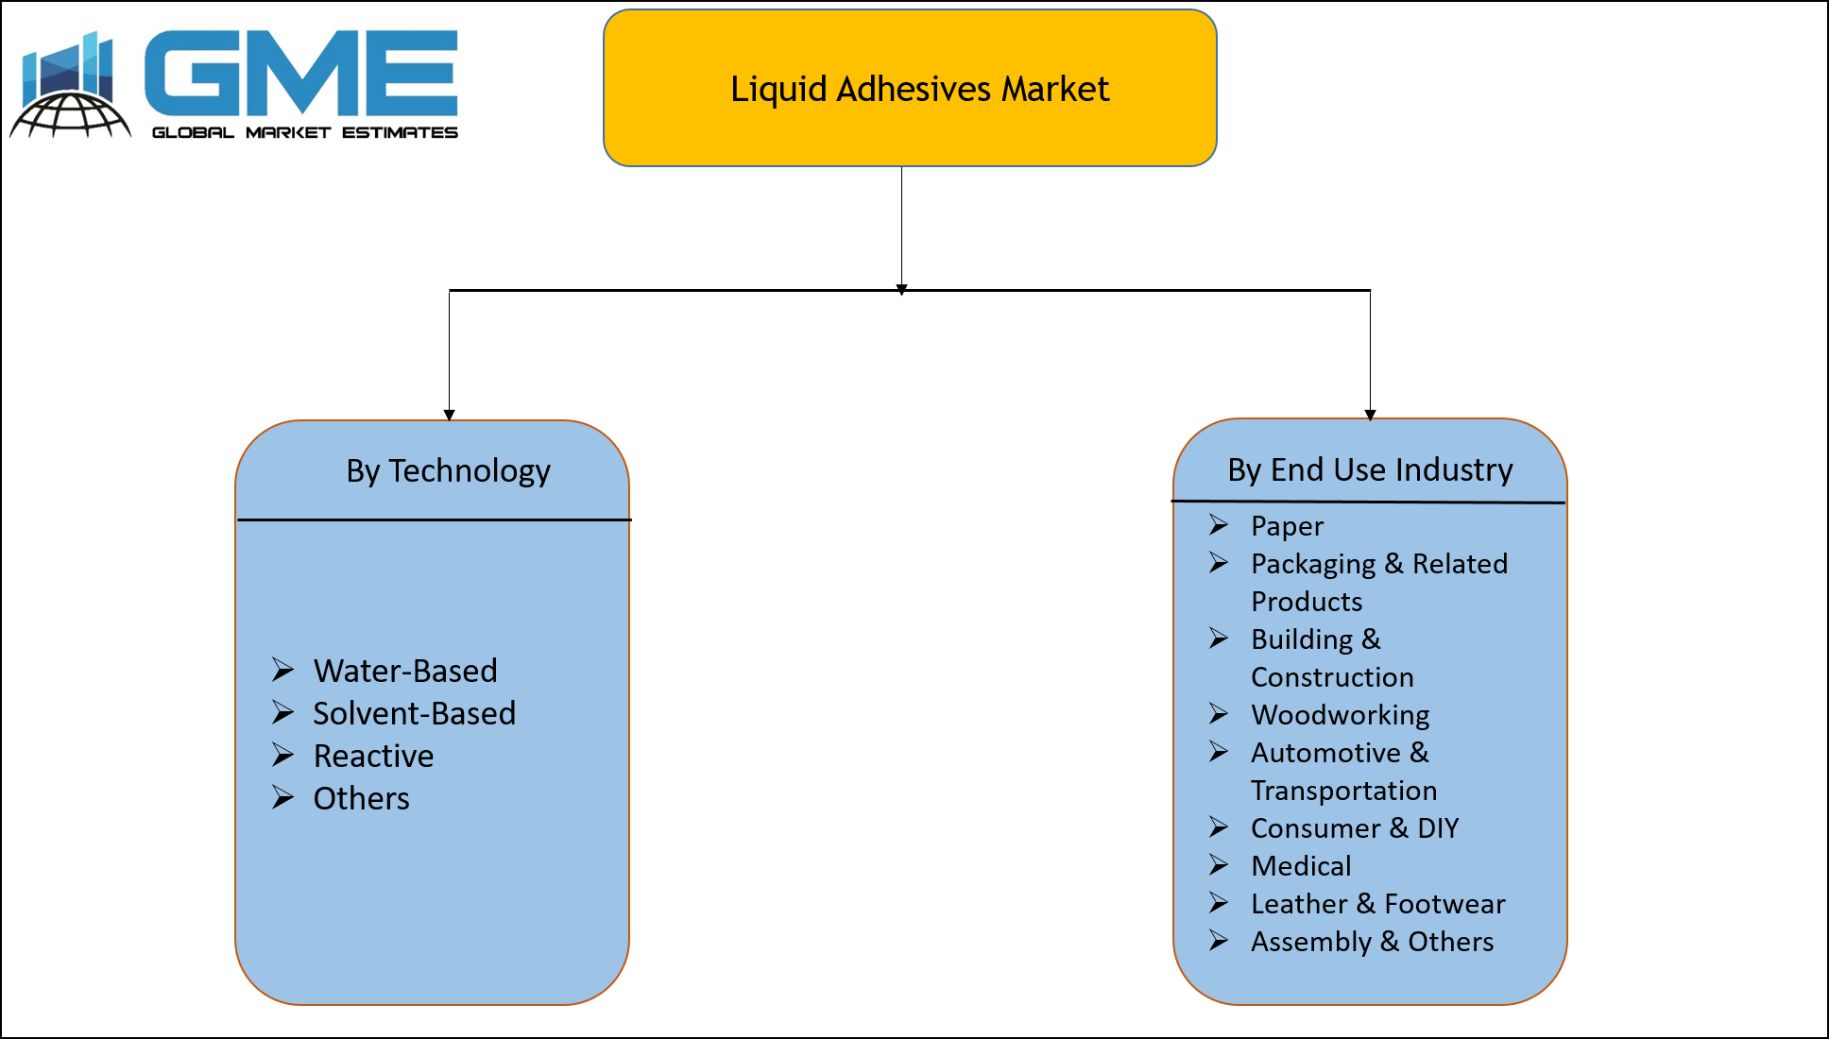 Liquid Adhesives Market Segmentation